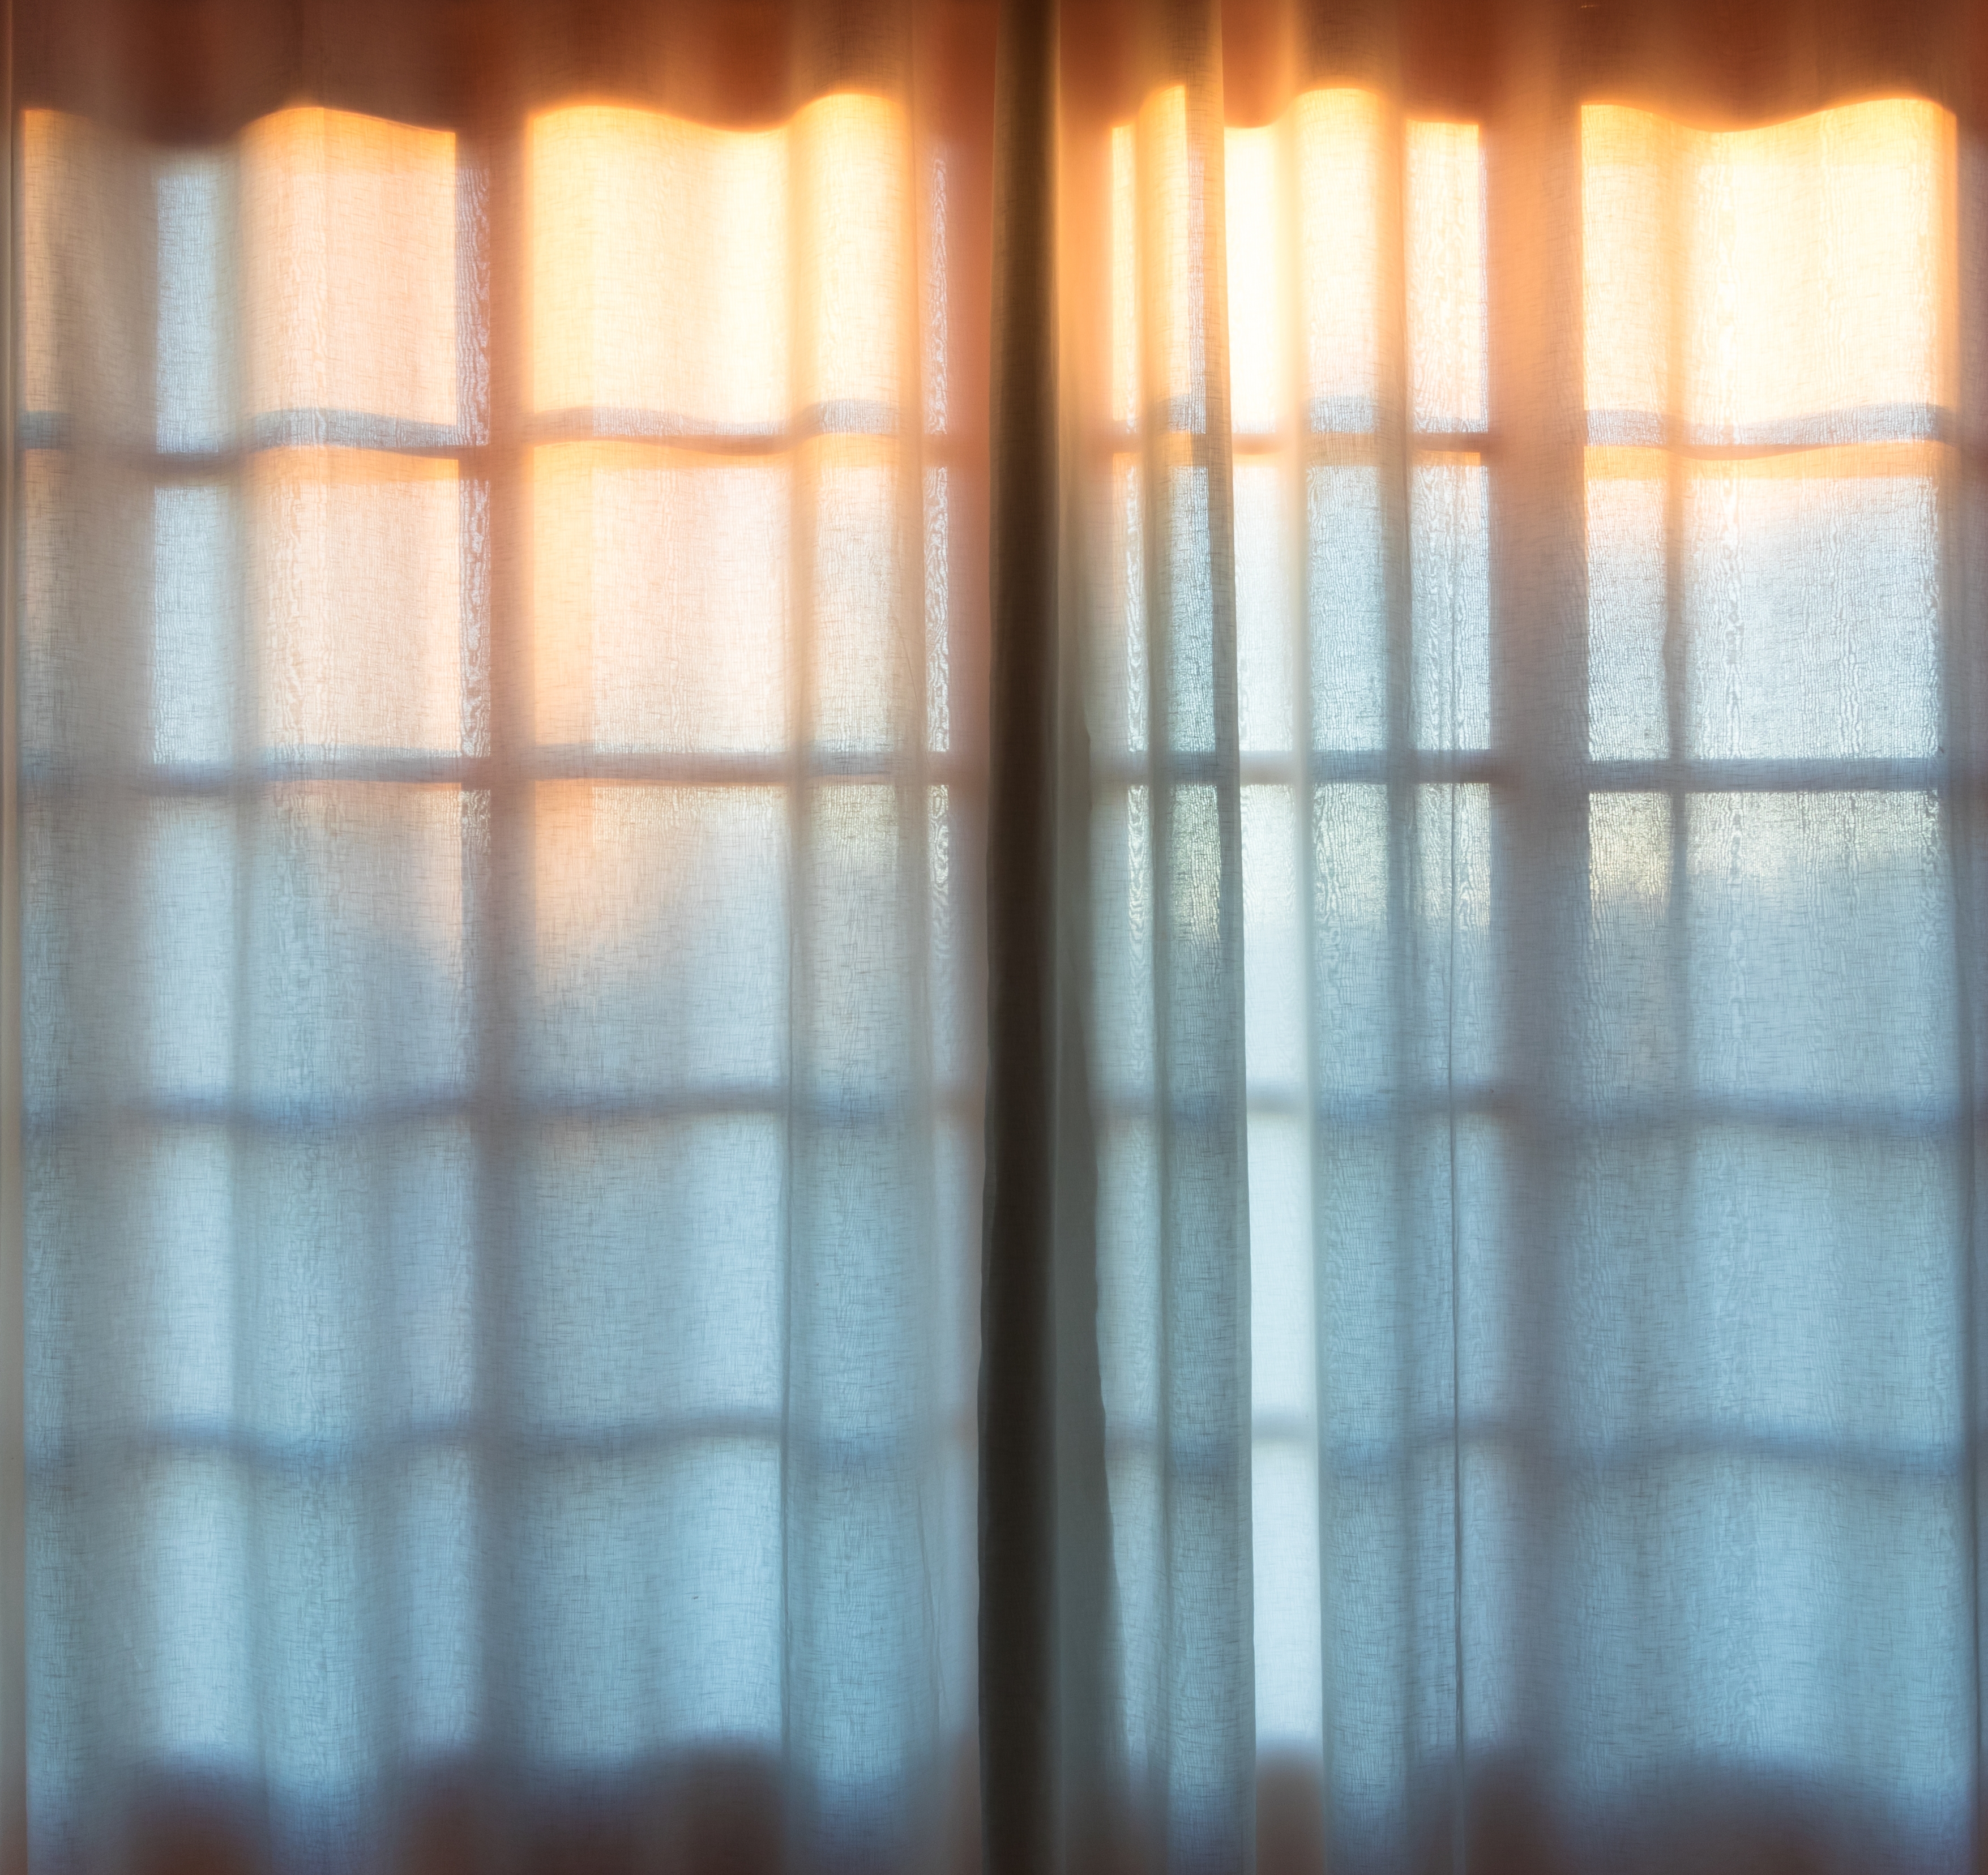 Sunset behind window | Source: Shutterstock